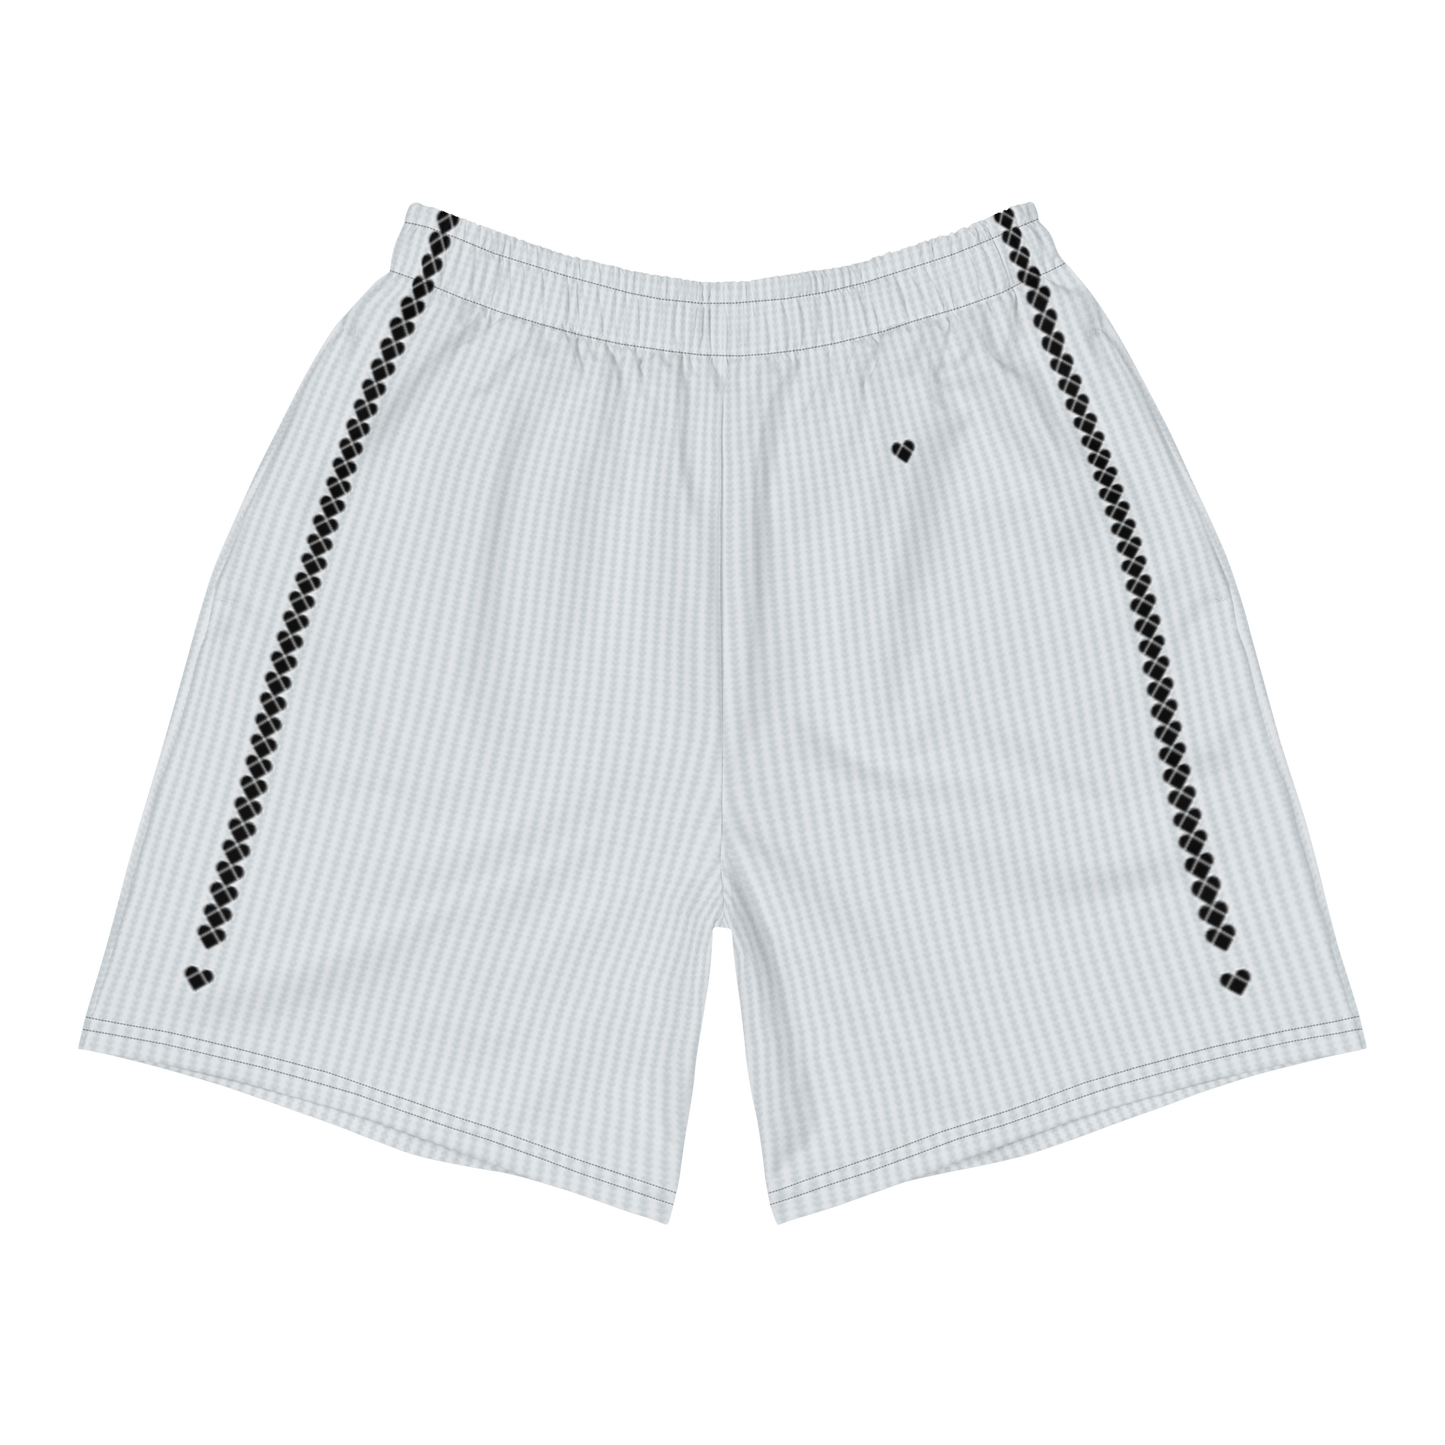 Distinctive Heart Stripe on Light Gray Lovogram Sport Shorts, CRiZ AMOR